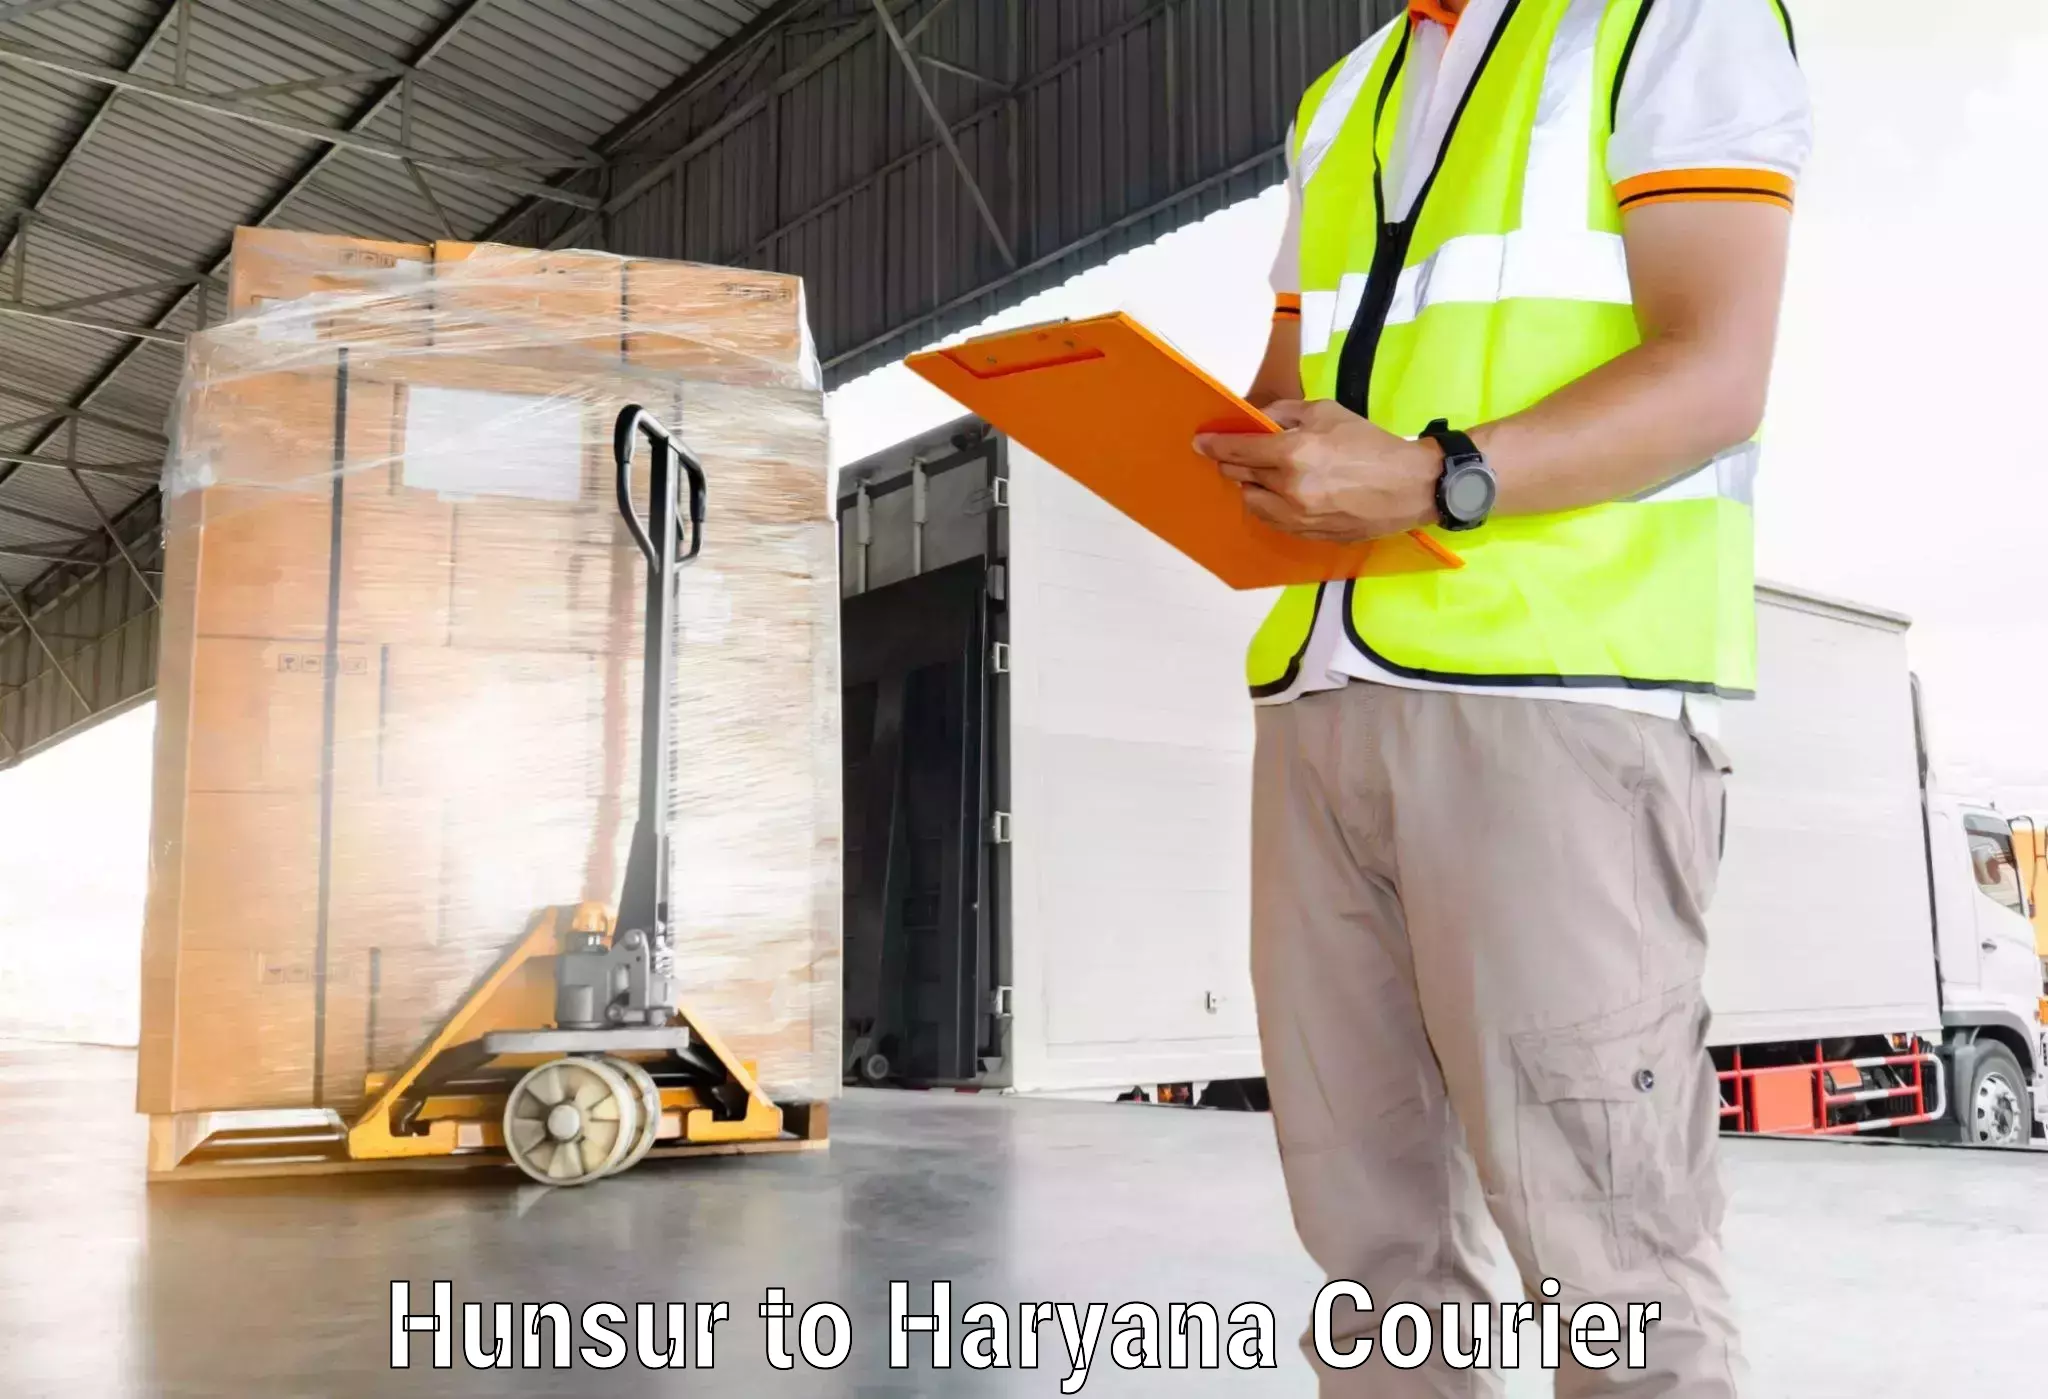 Enhanced shipping experience Hunsur to Odhan